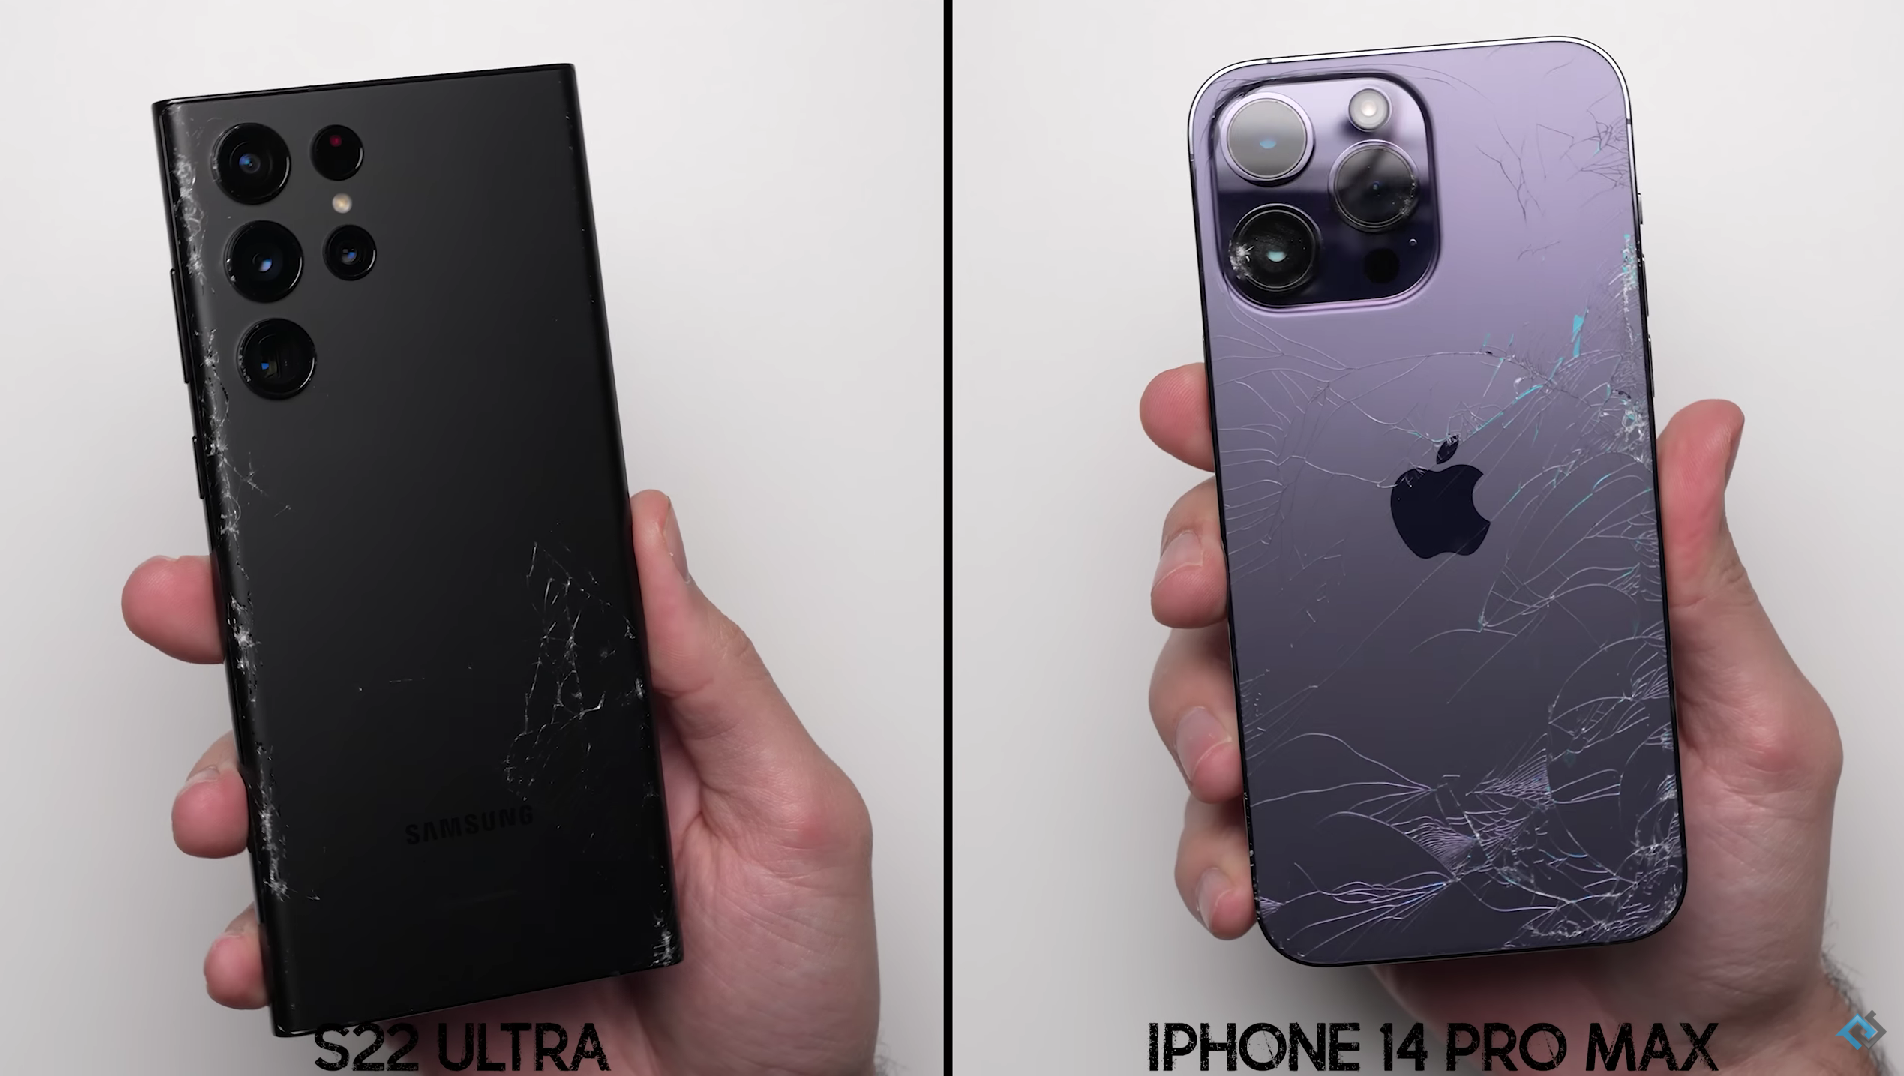 iPhone 14 Pro Max vs Samsung Galaxy S22 Ultra in a drop test